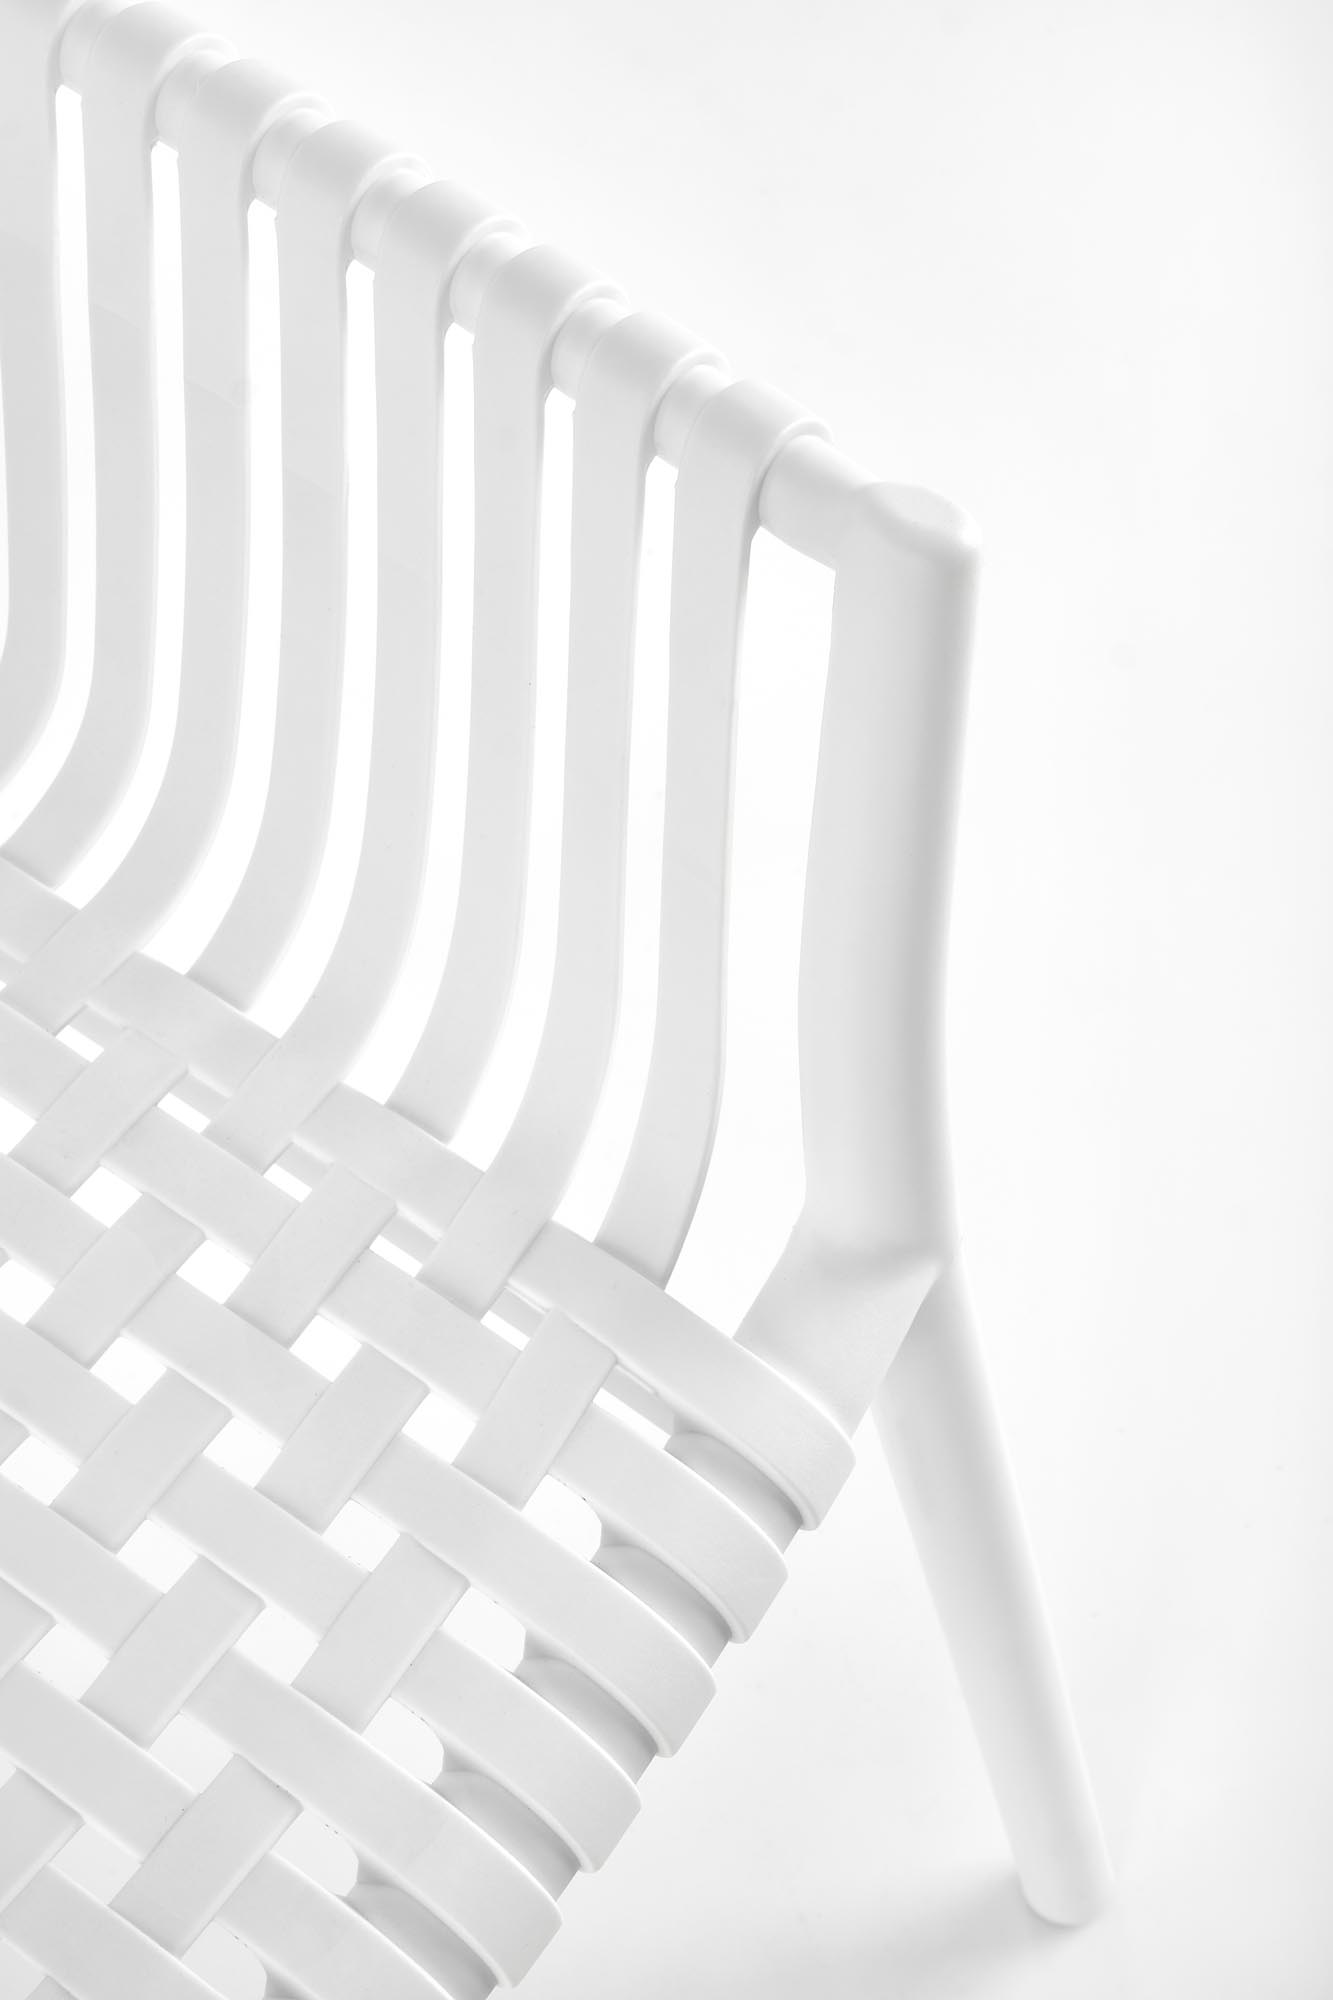 K492 Židle Bílý (1p=4szt) Židle z tworzywa sztucznego k492 - Bílý